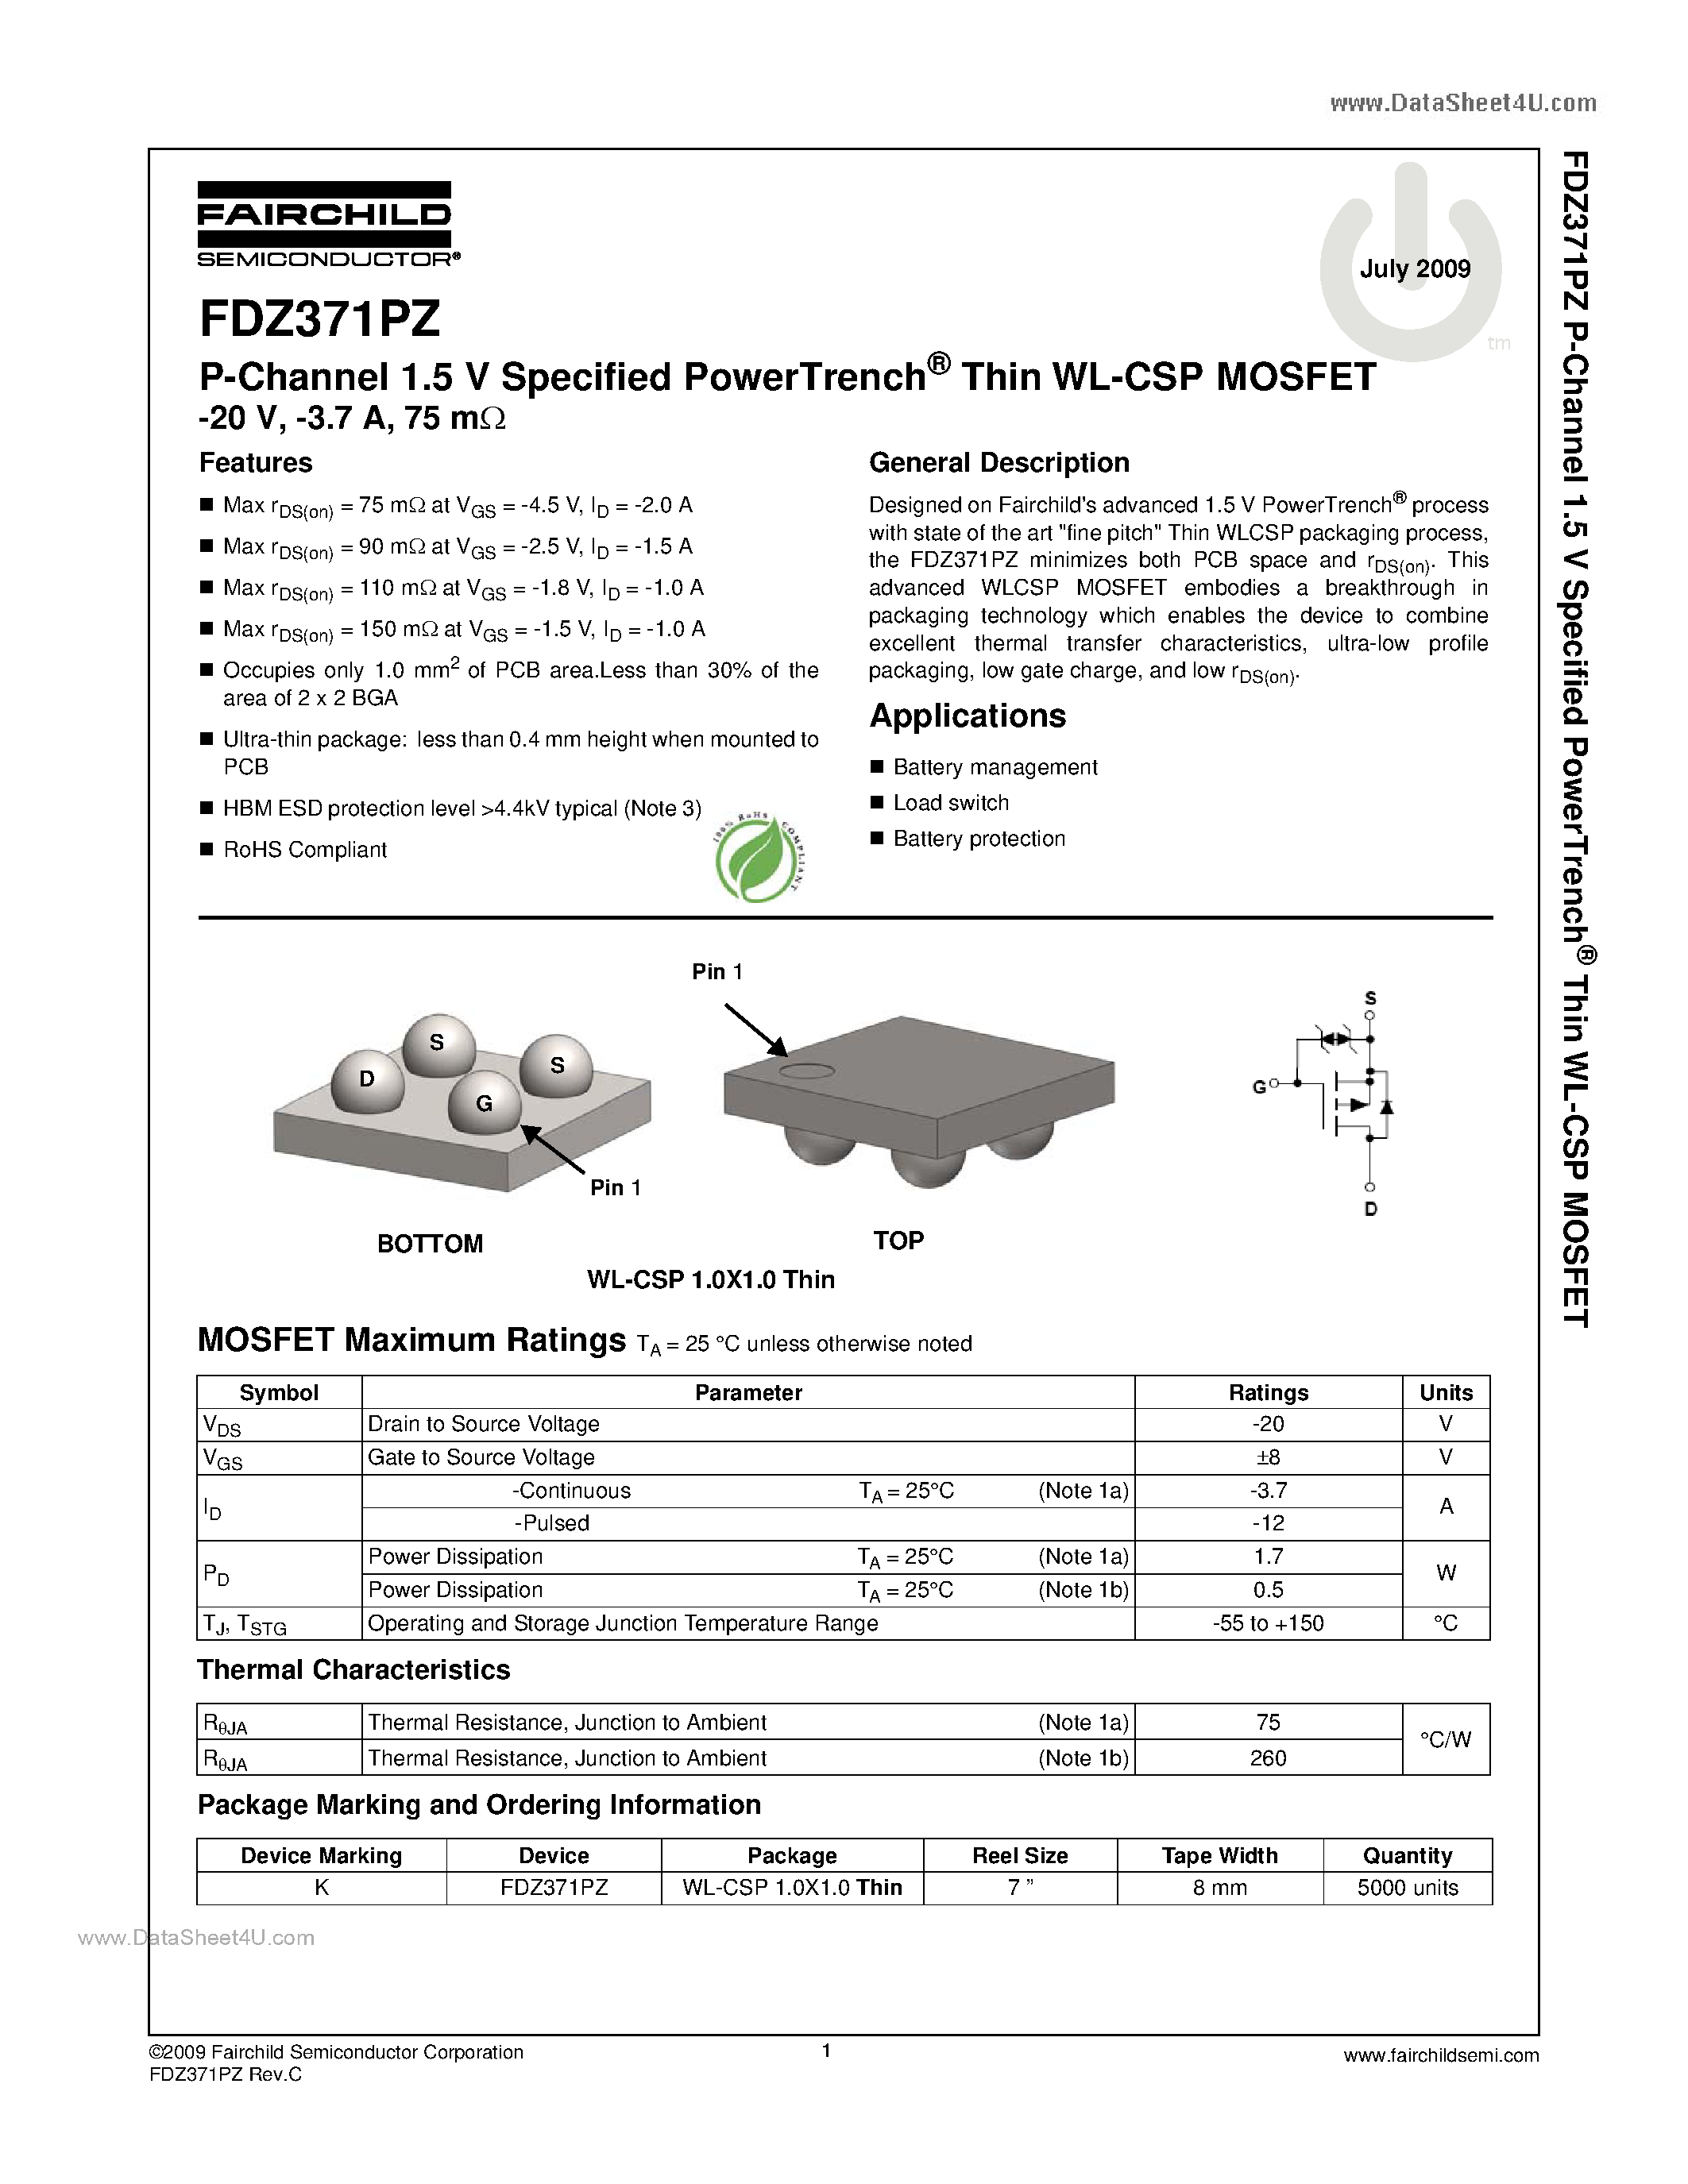 Даташит FDZ371PZ - Thin WL-CSP MOSFET страница 1